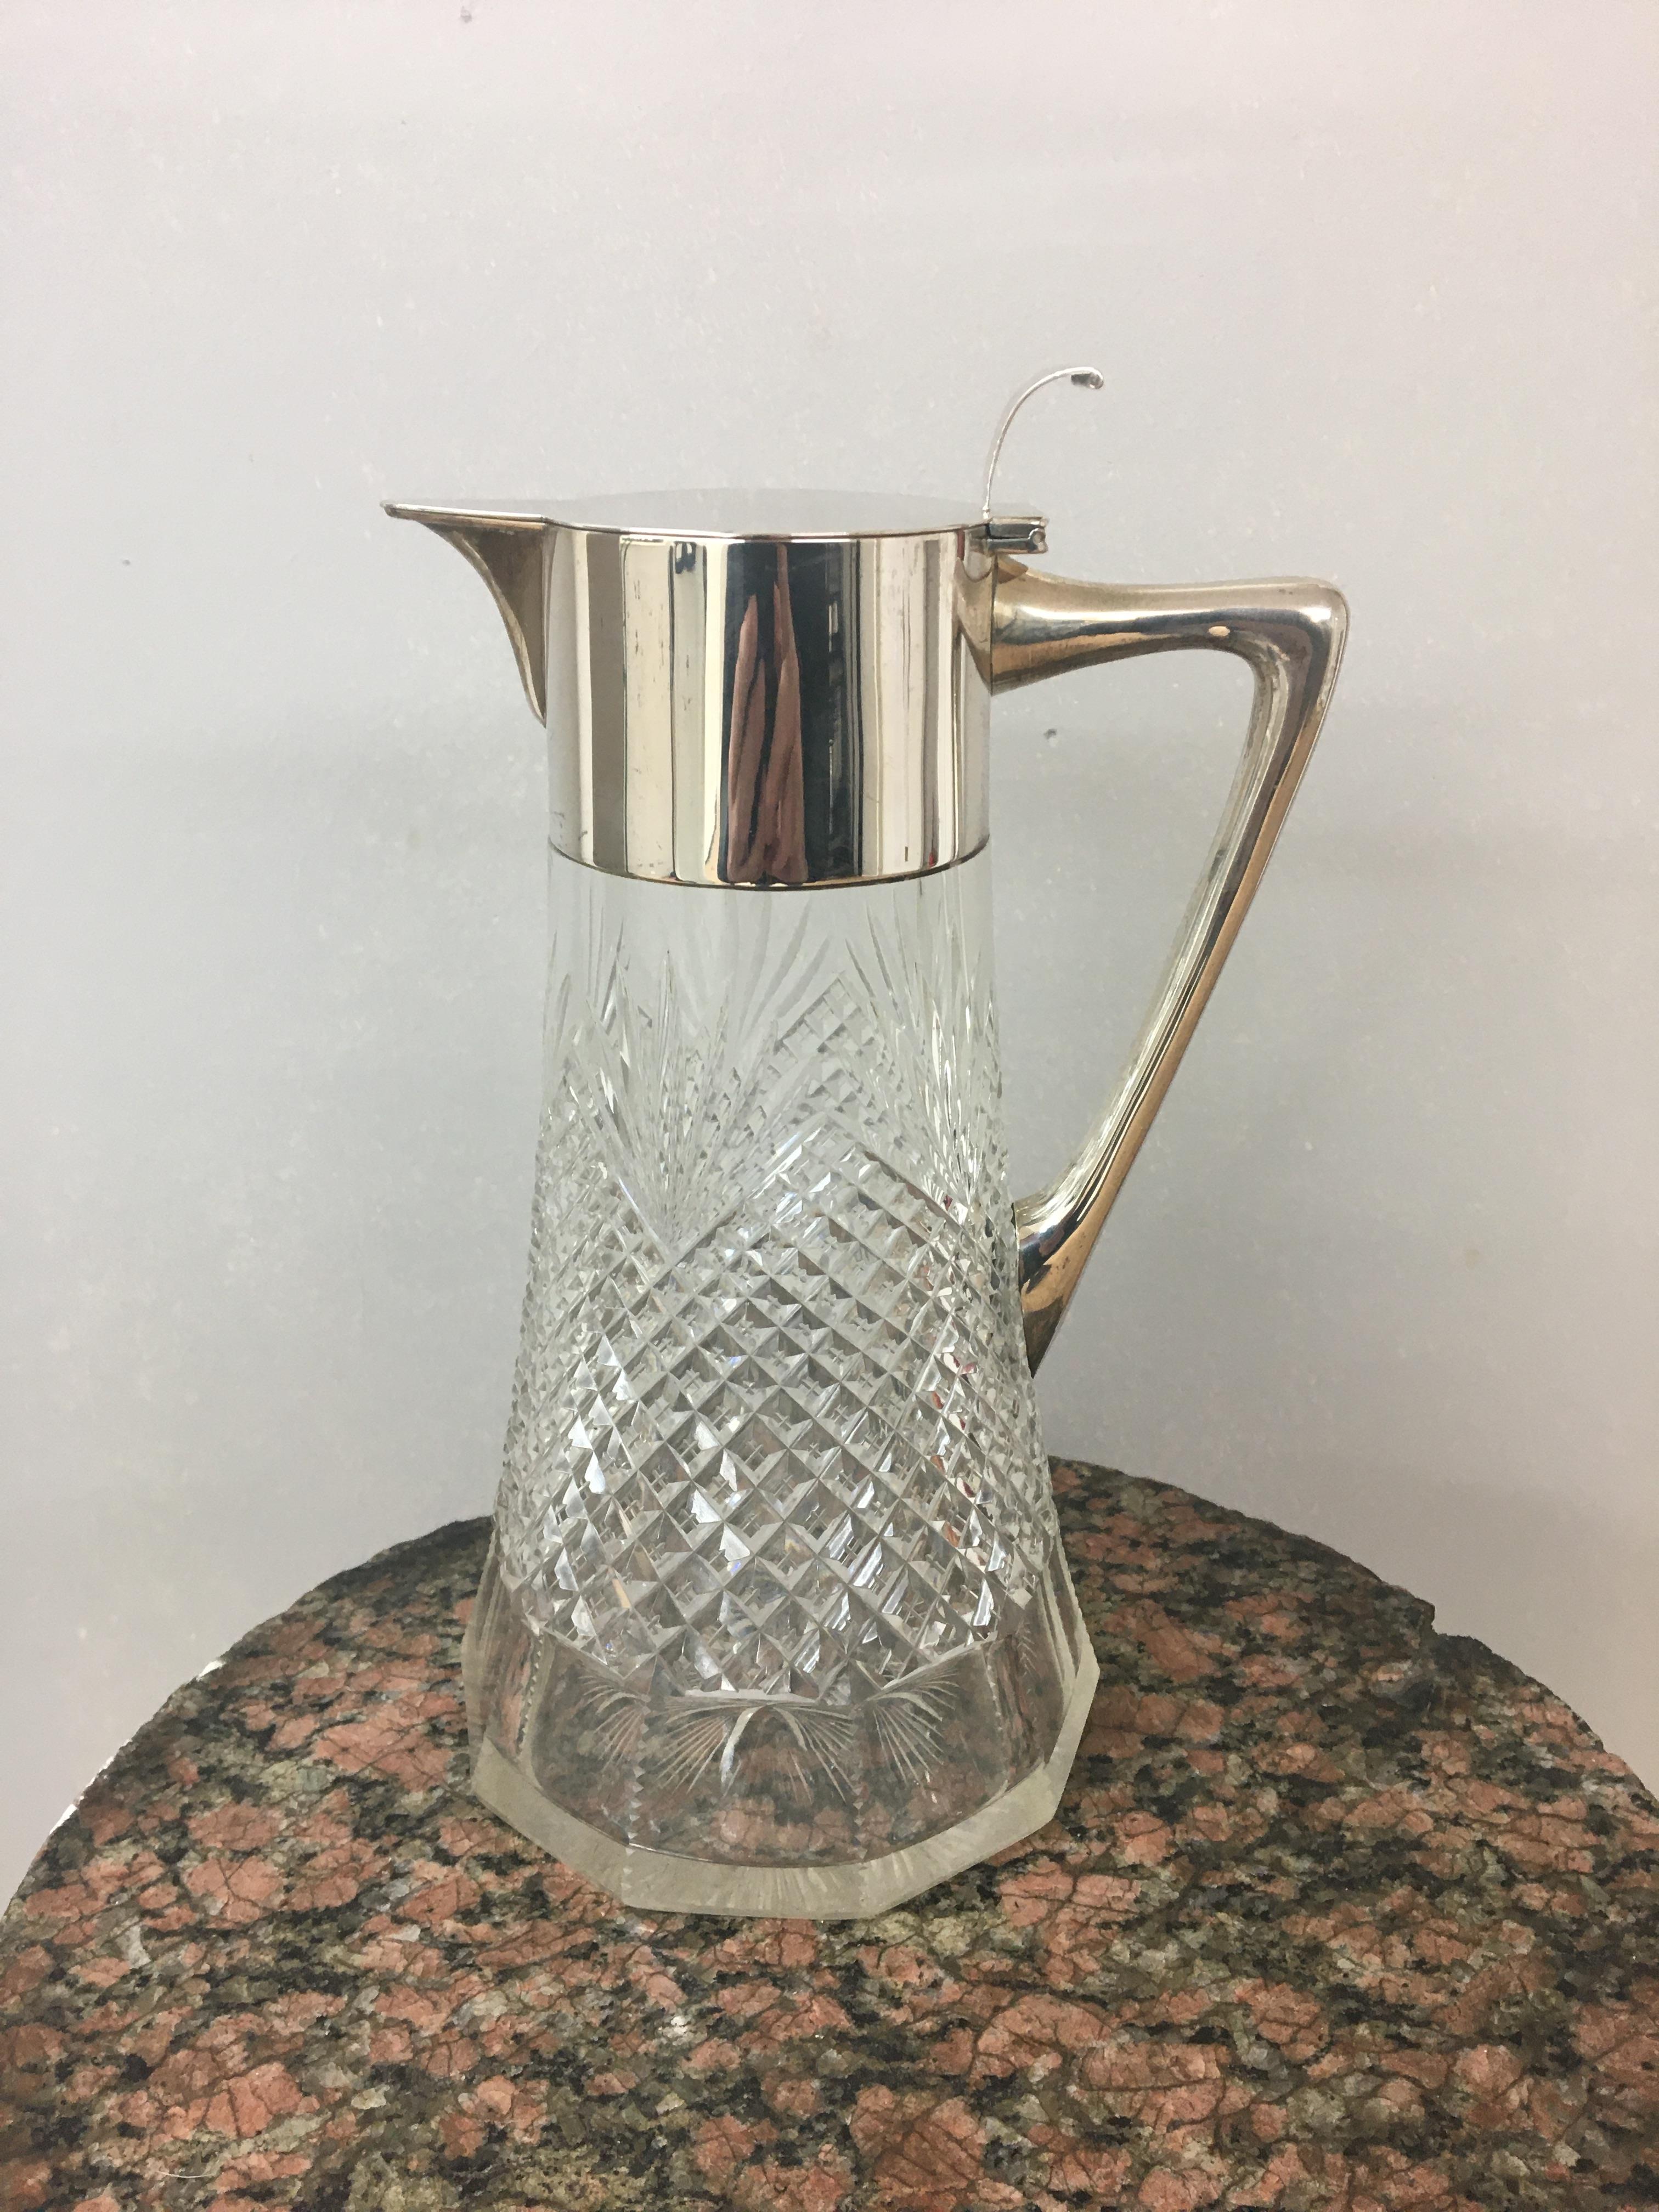 Continental Silver .800 silver topped claret jug maker marked "Gerr Friediander", 26 cm high.